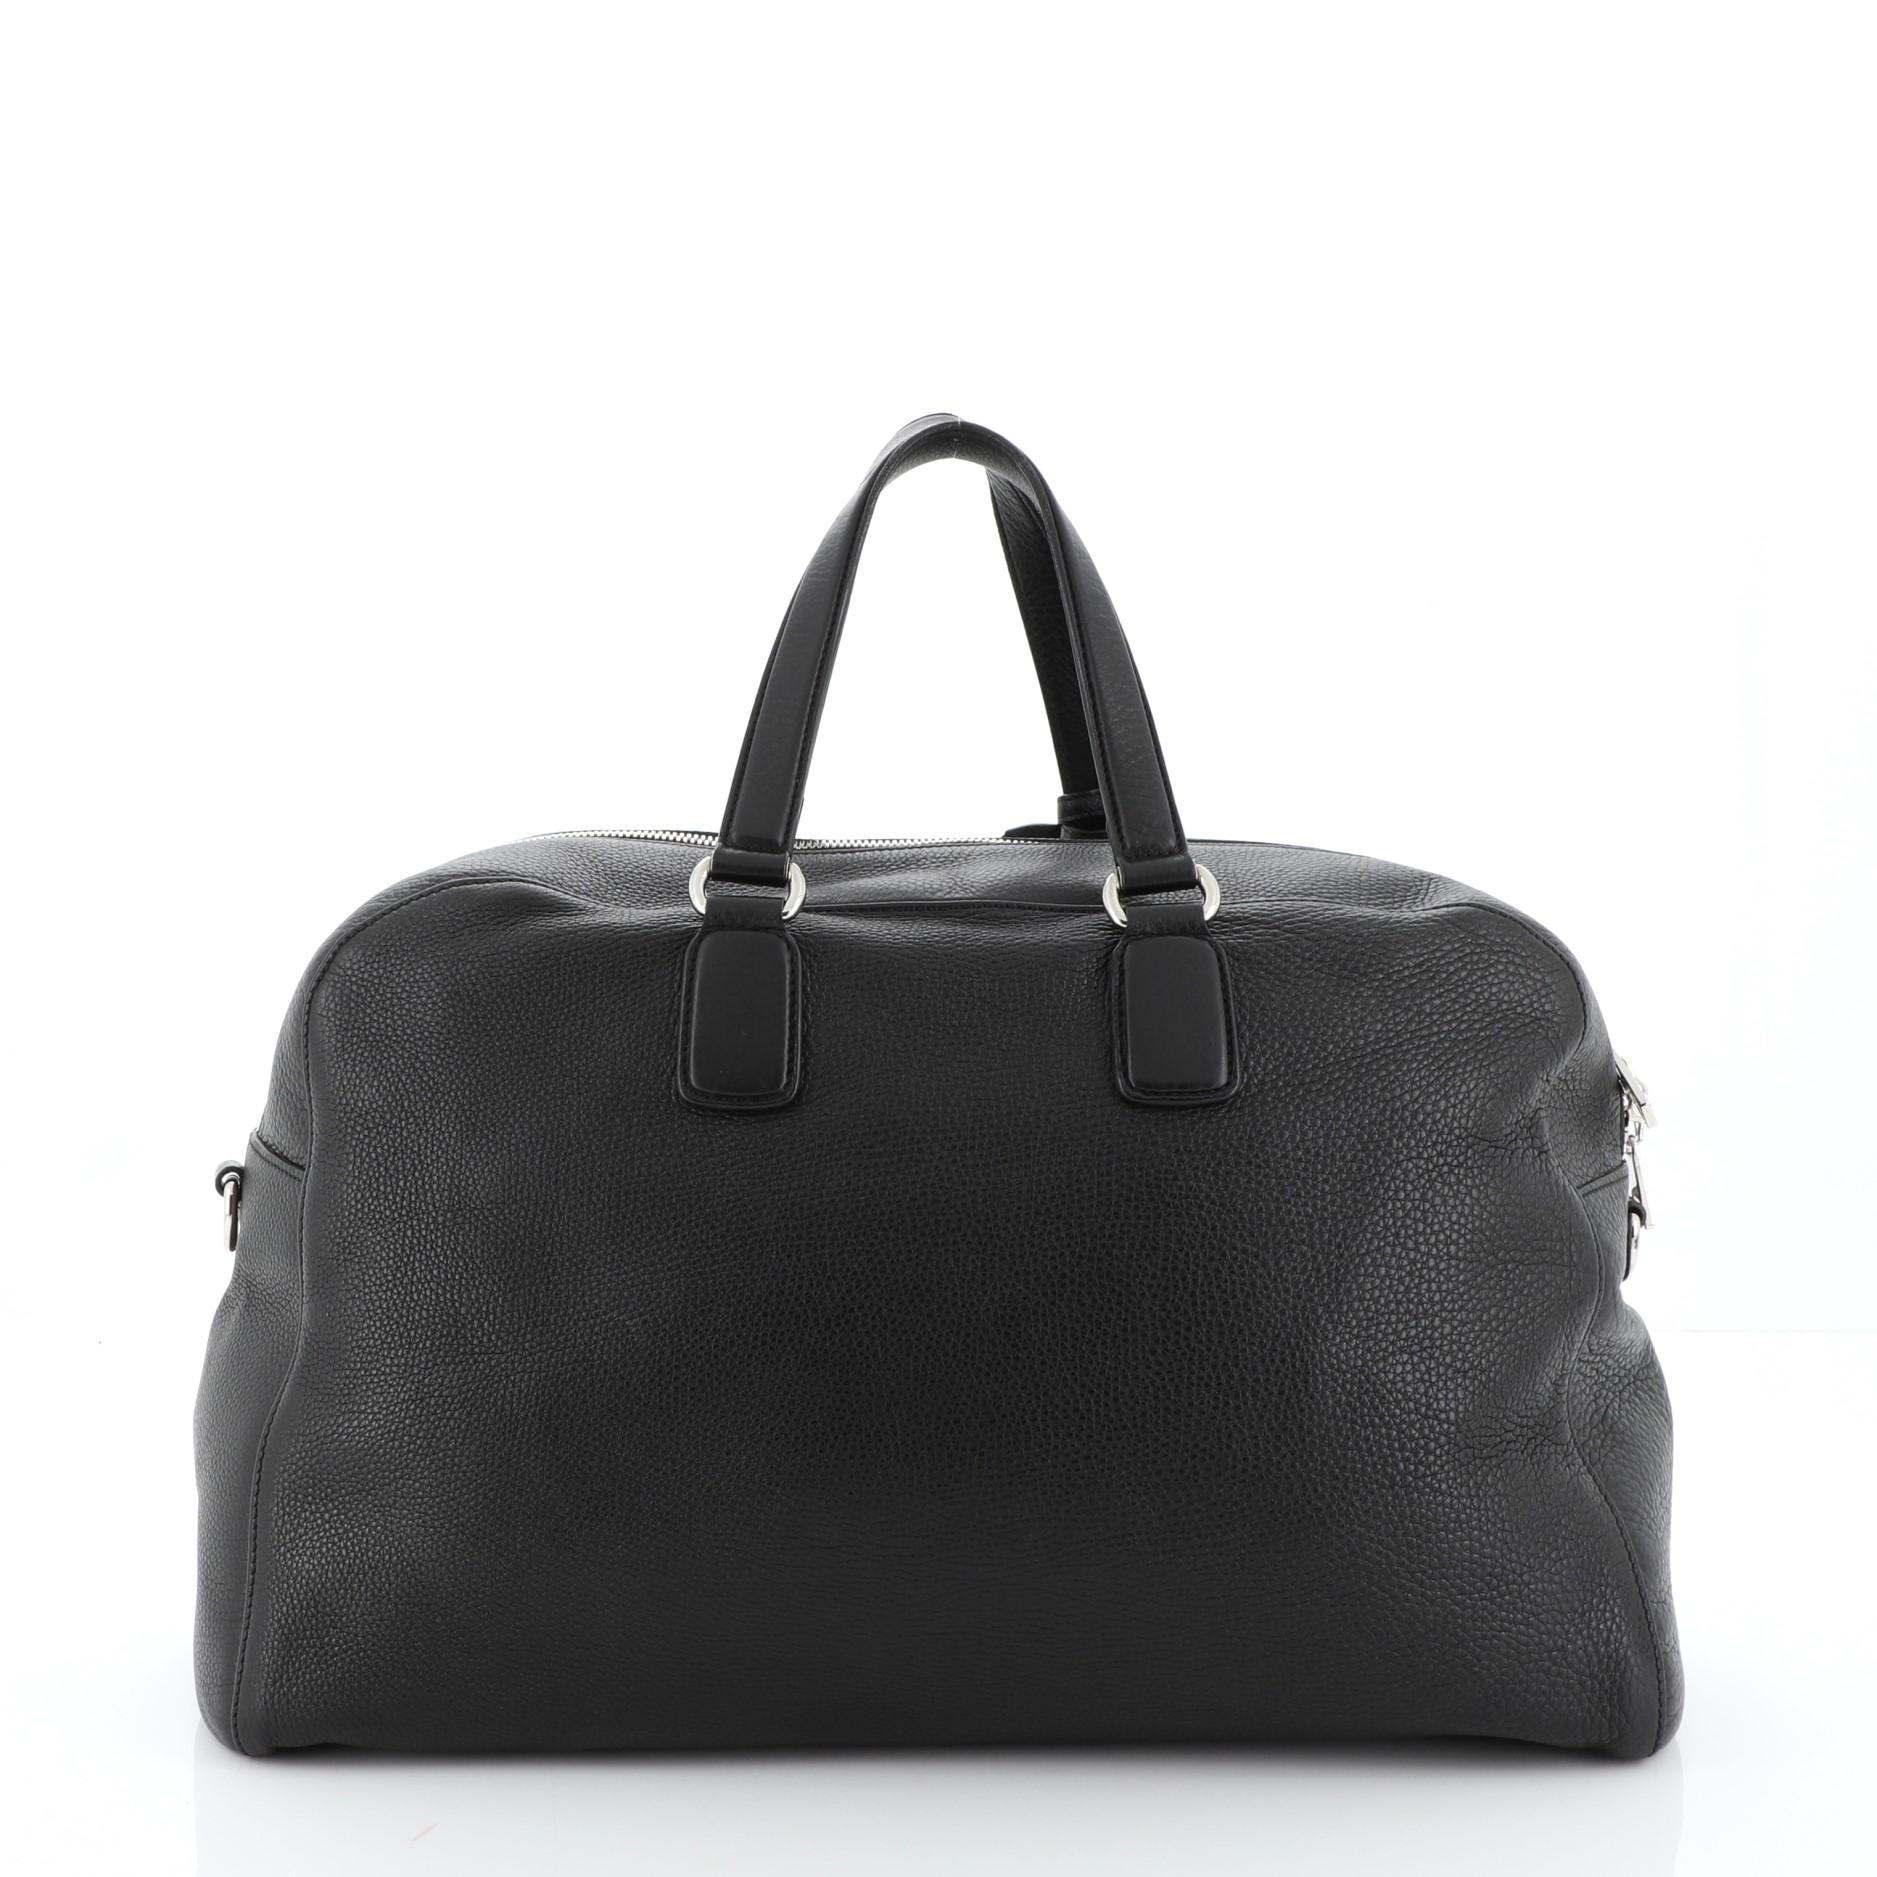 Black Gucci Soho Duffle Bag Leather